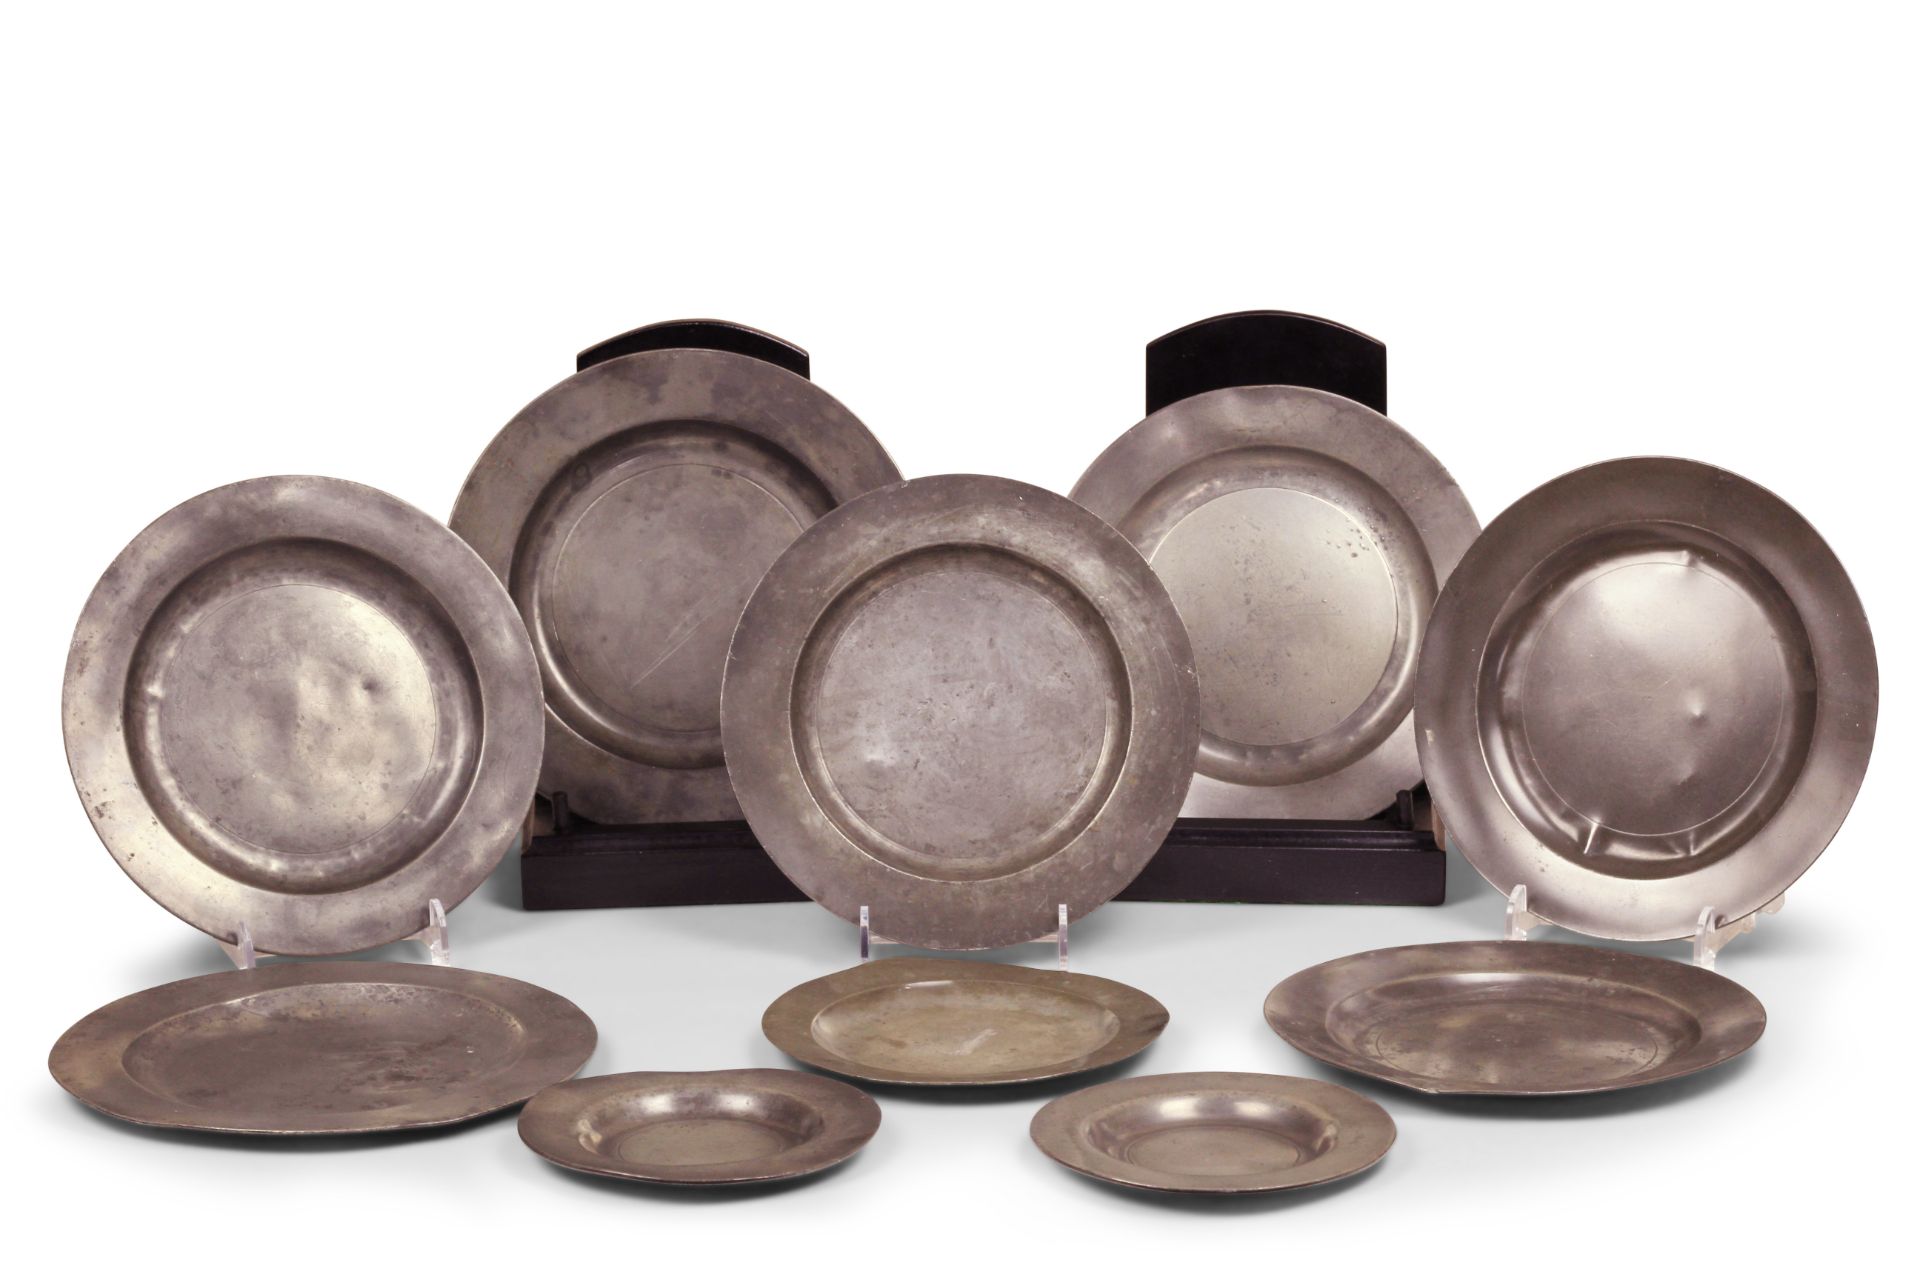 Ten 18th century pewter plates